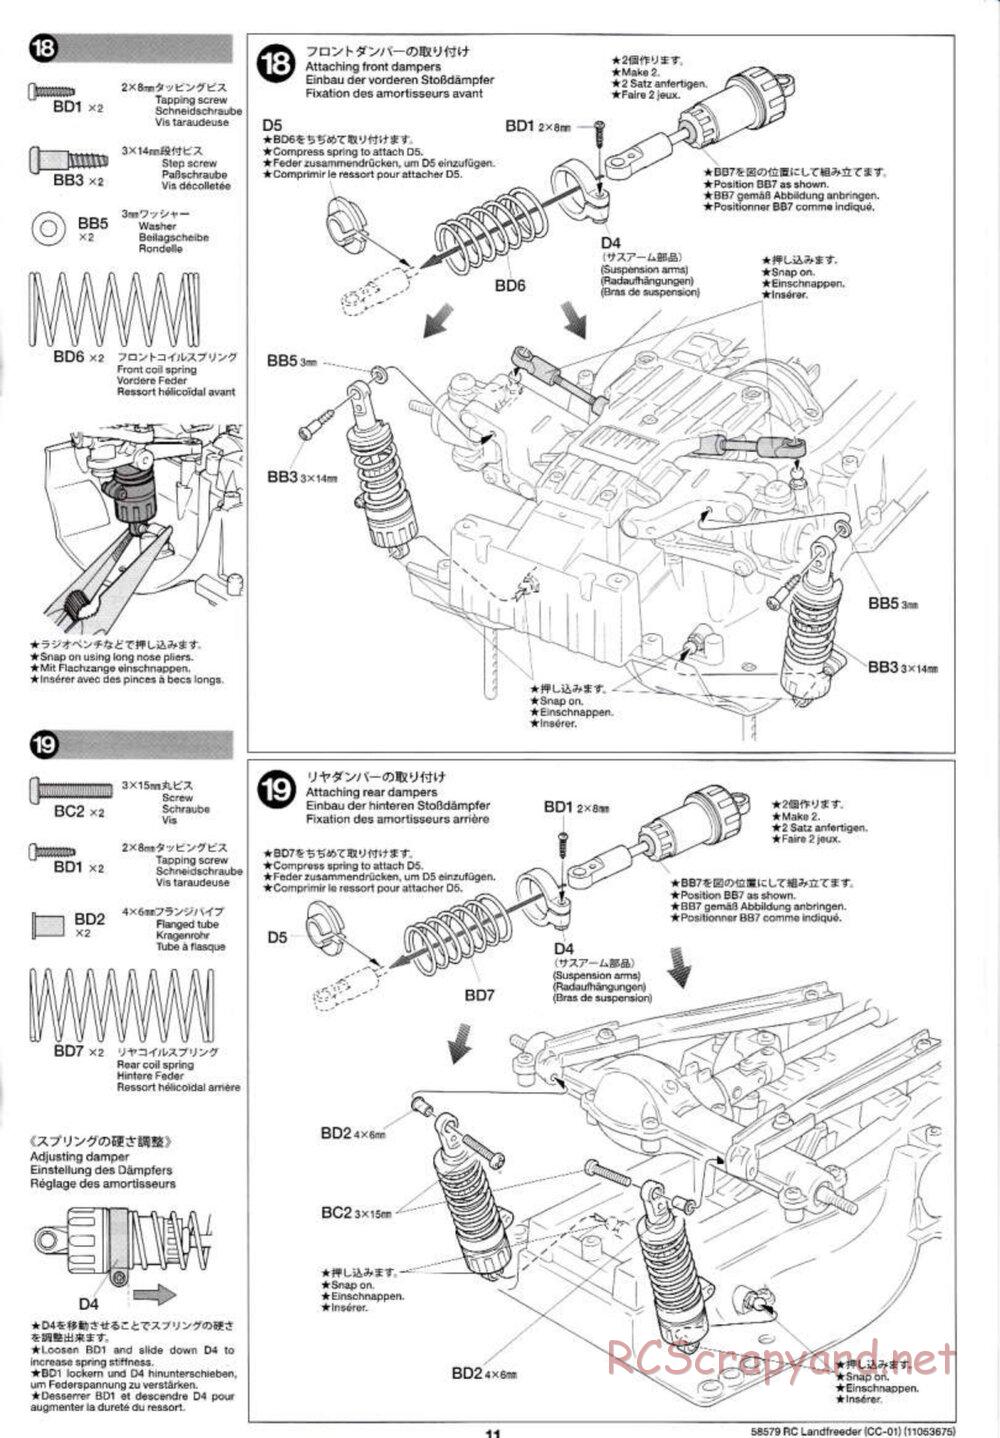 Tamiya - LandFreeder - CC-01 Chassis - Manual - Page 11